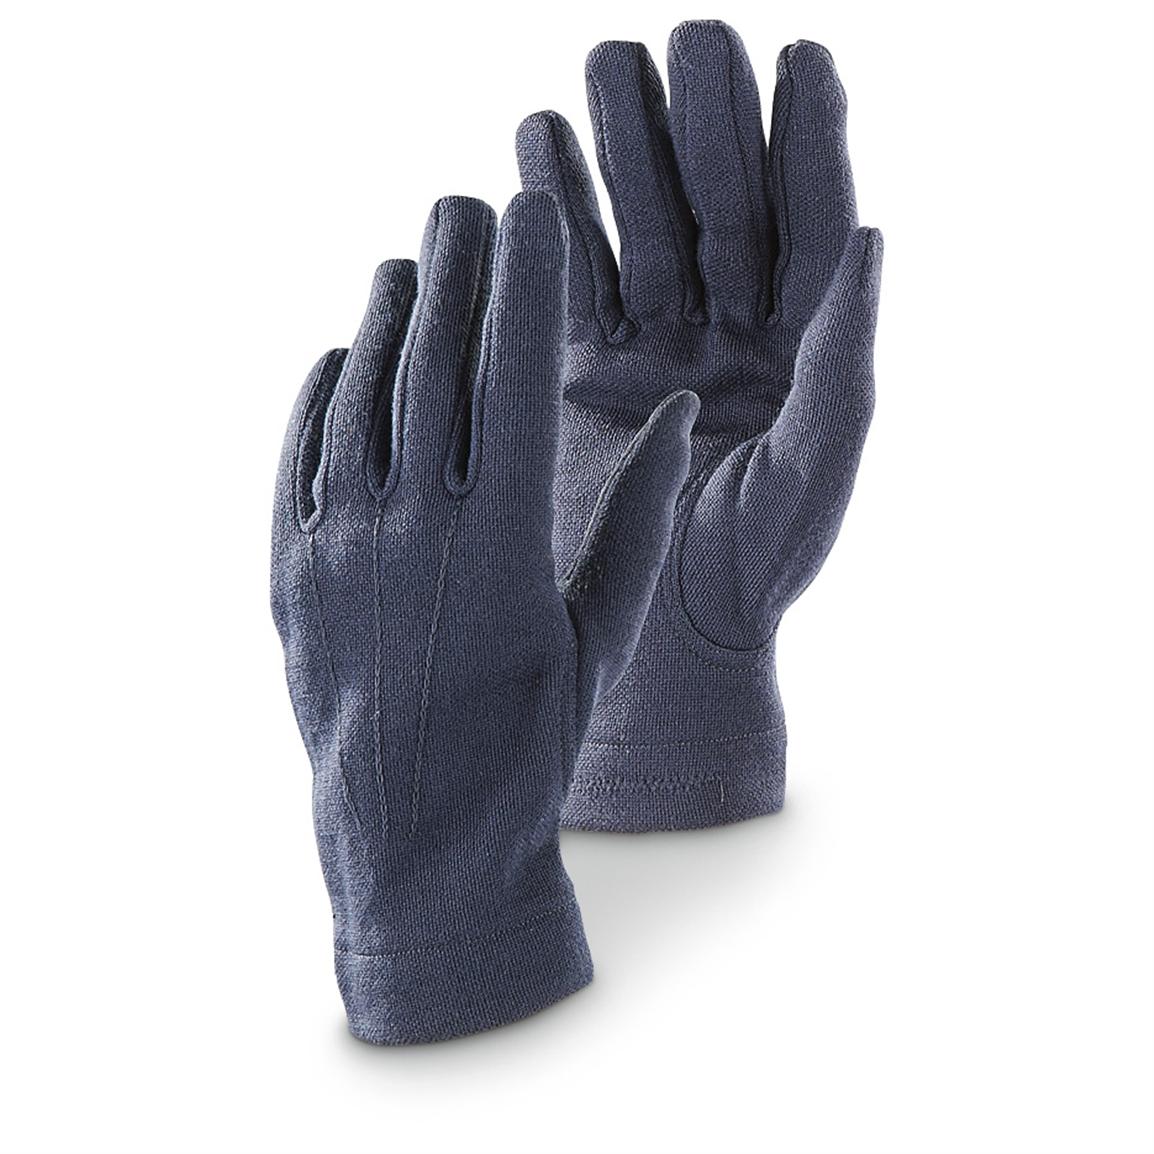 4-Prs. of New Italian Military Surplus Gloves, Navy Blue